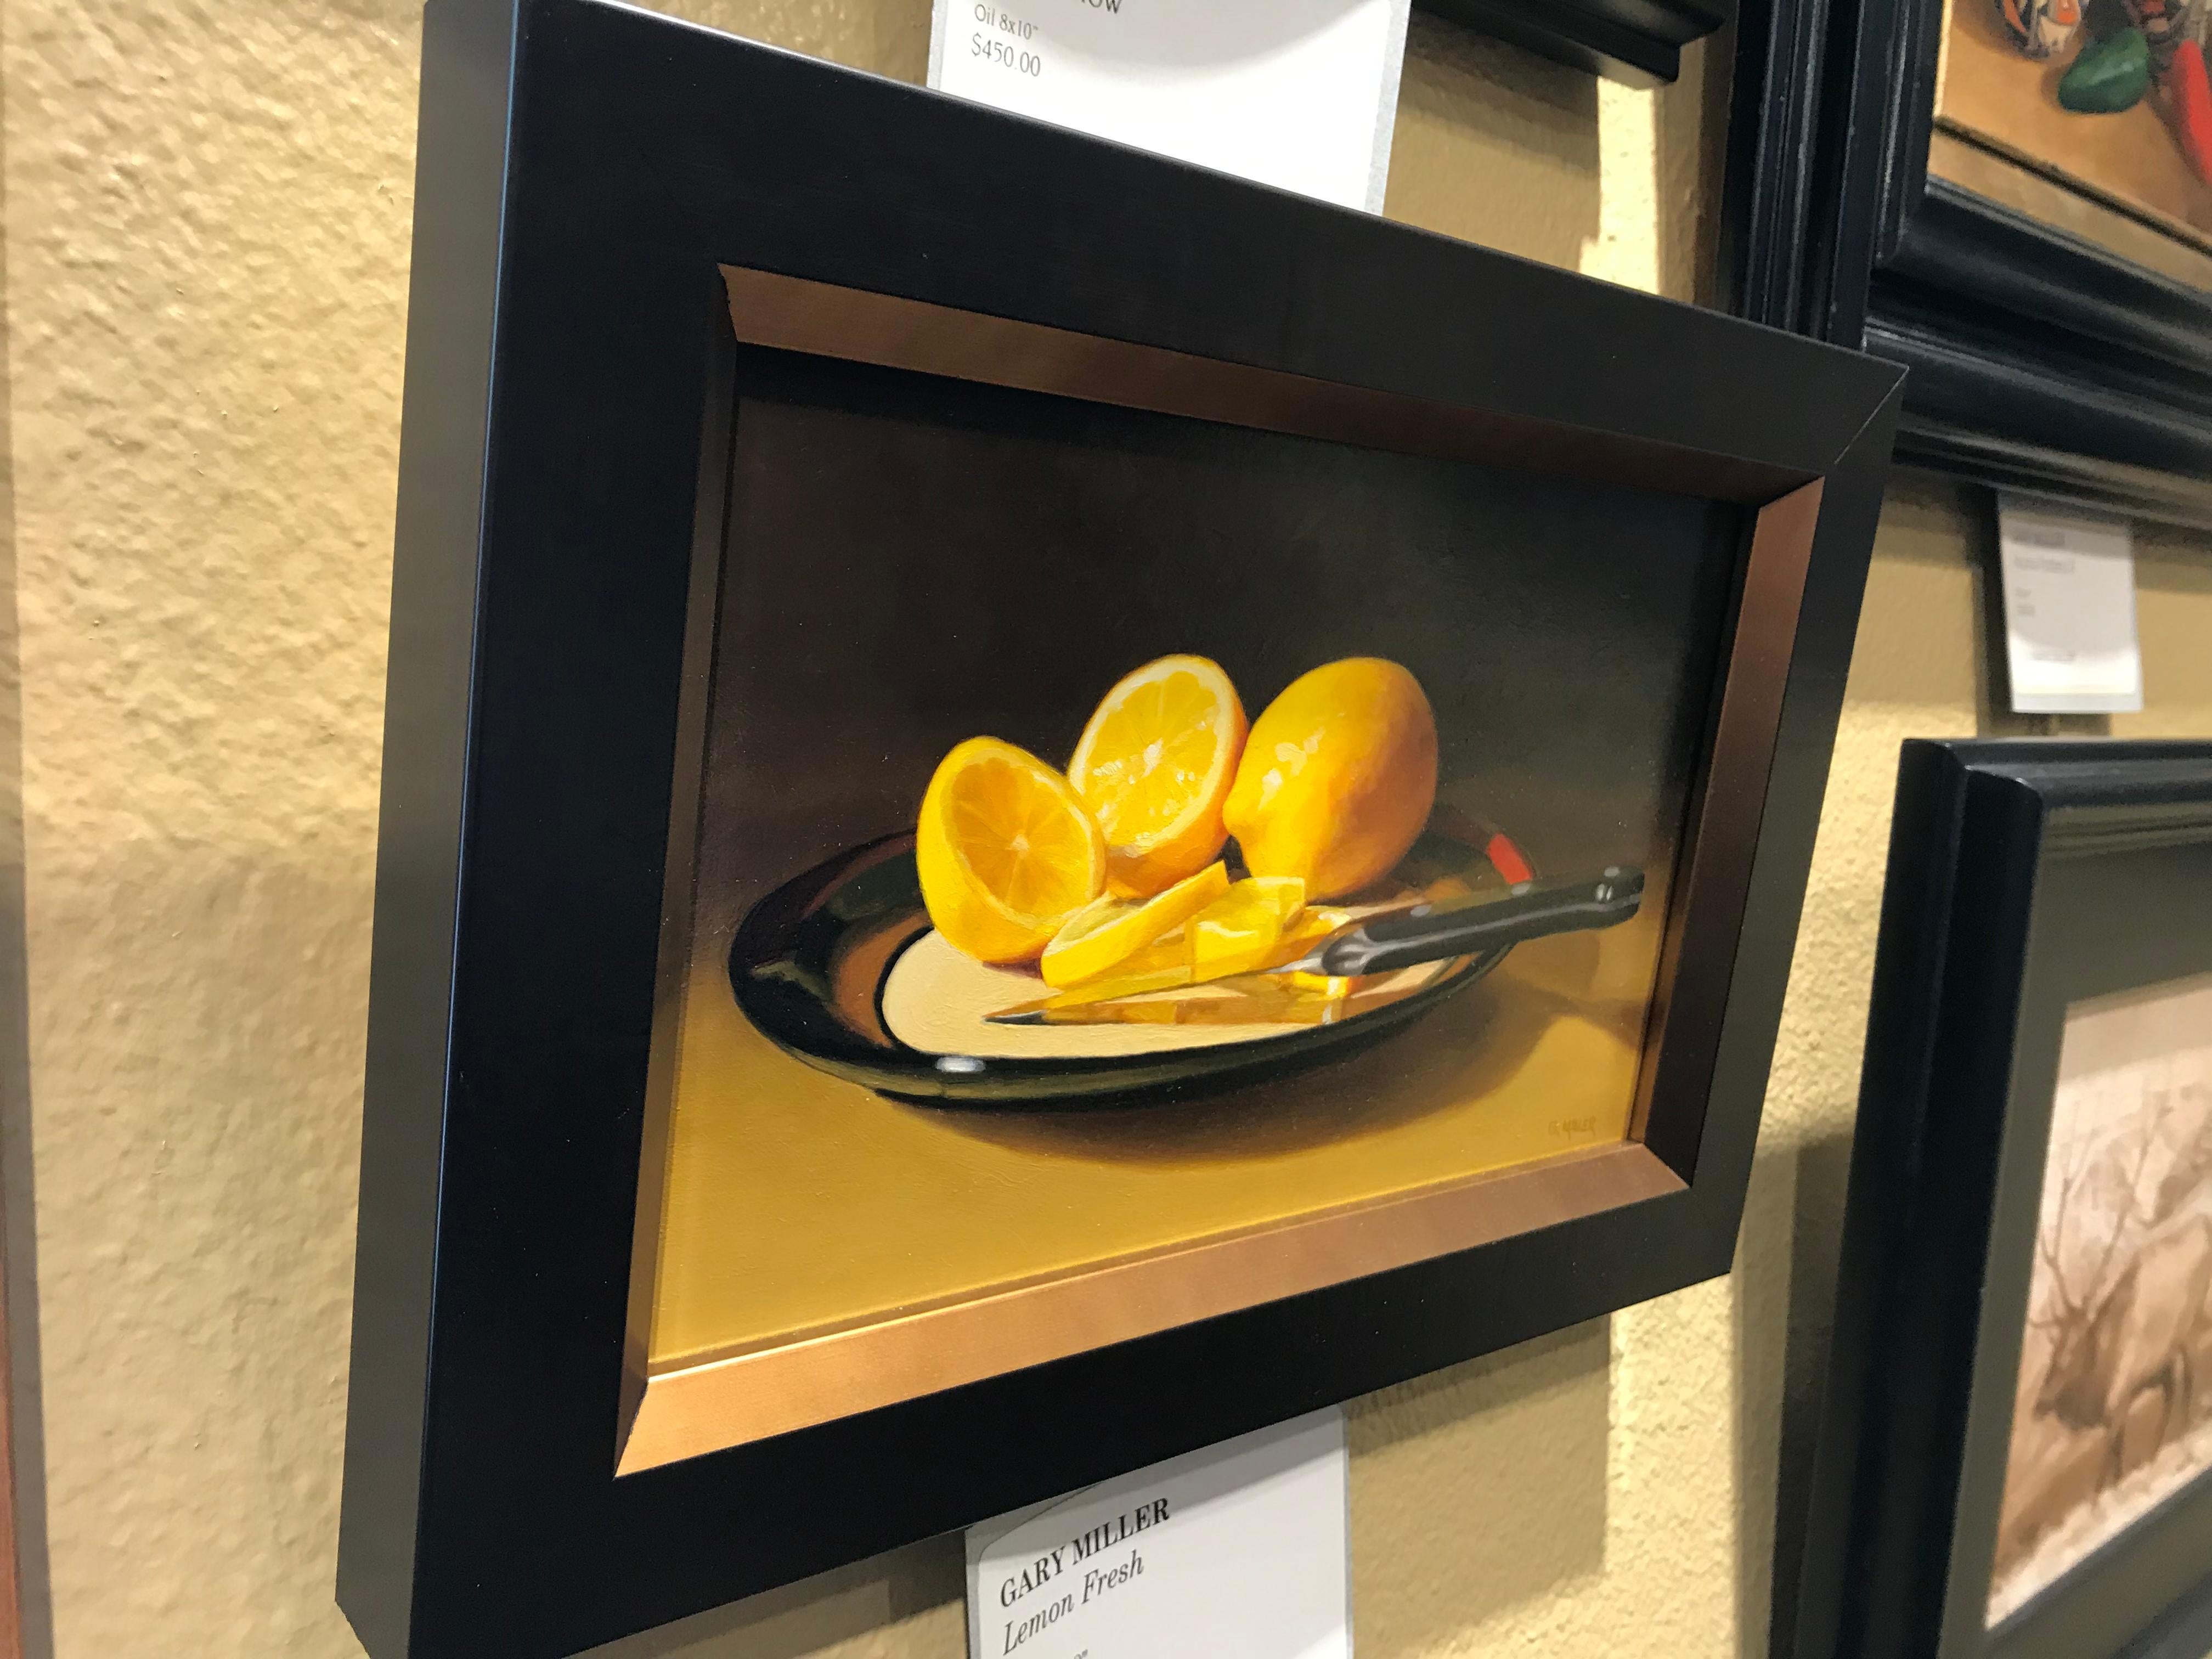 Still life painting of freshly cut Lemons by Gary Miller
5.5x10